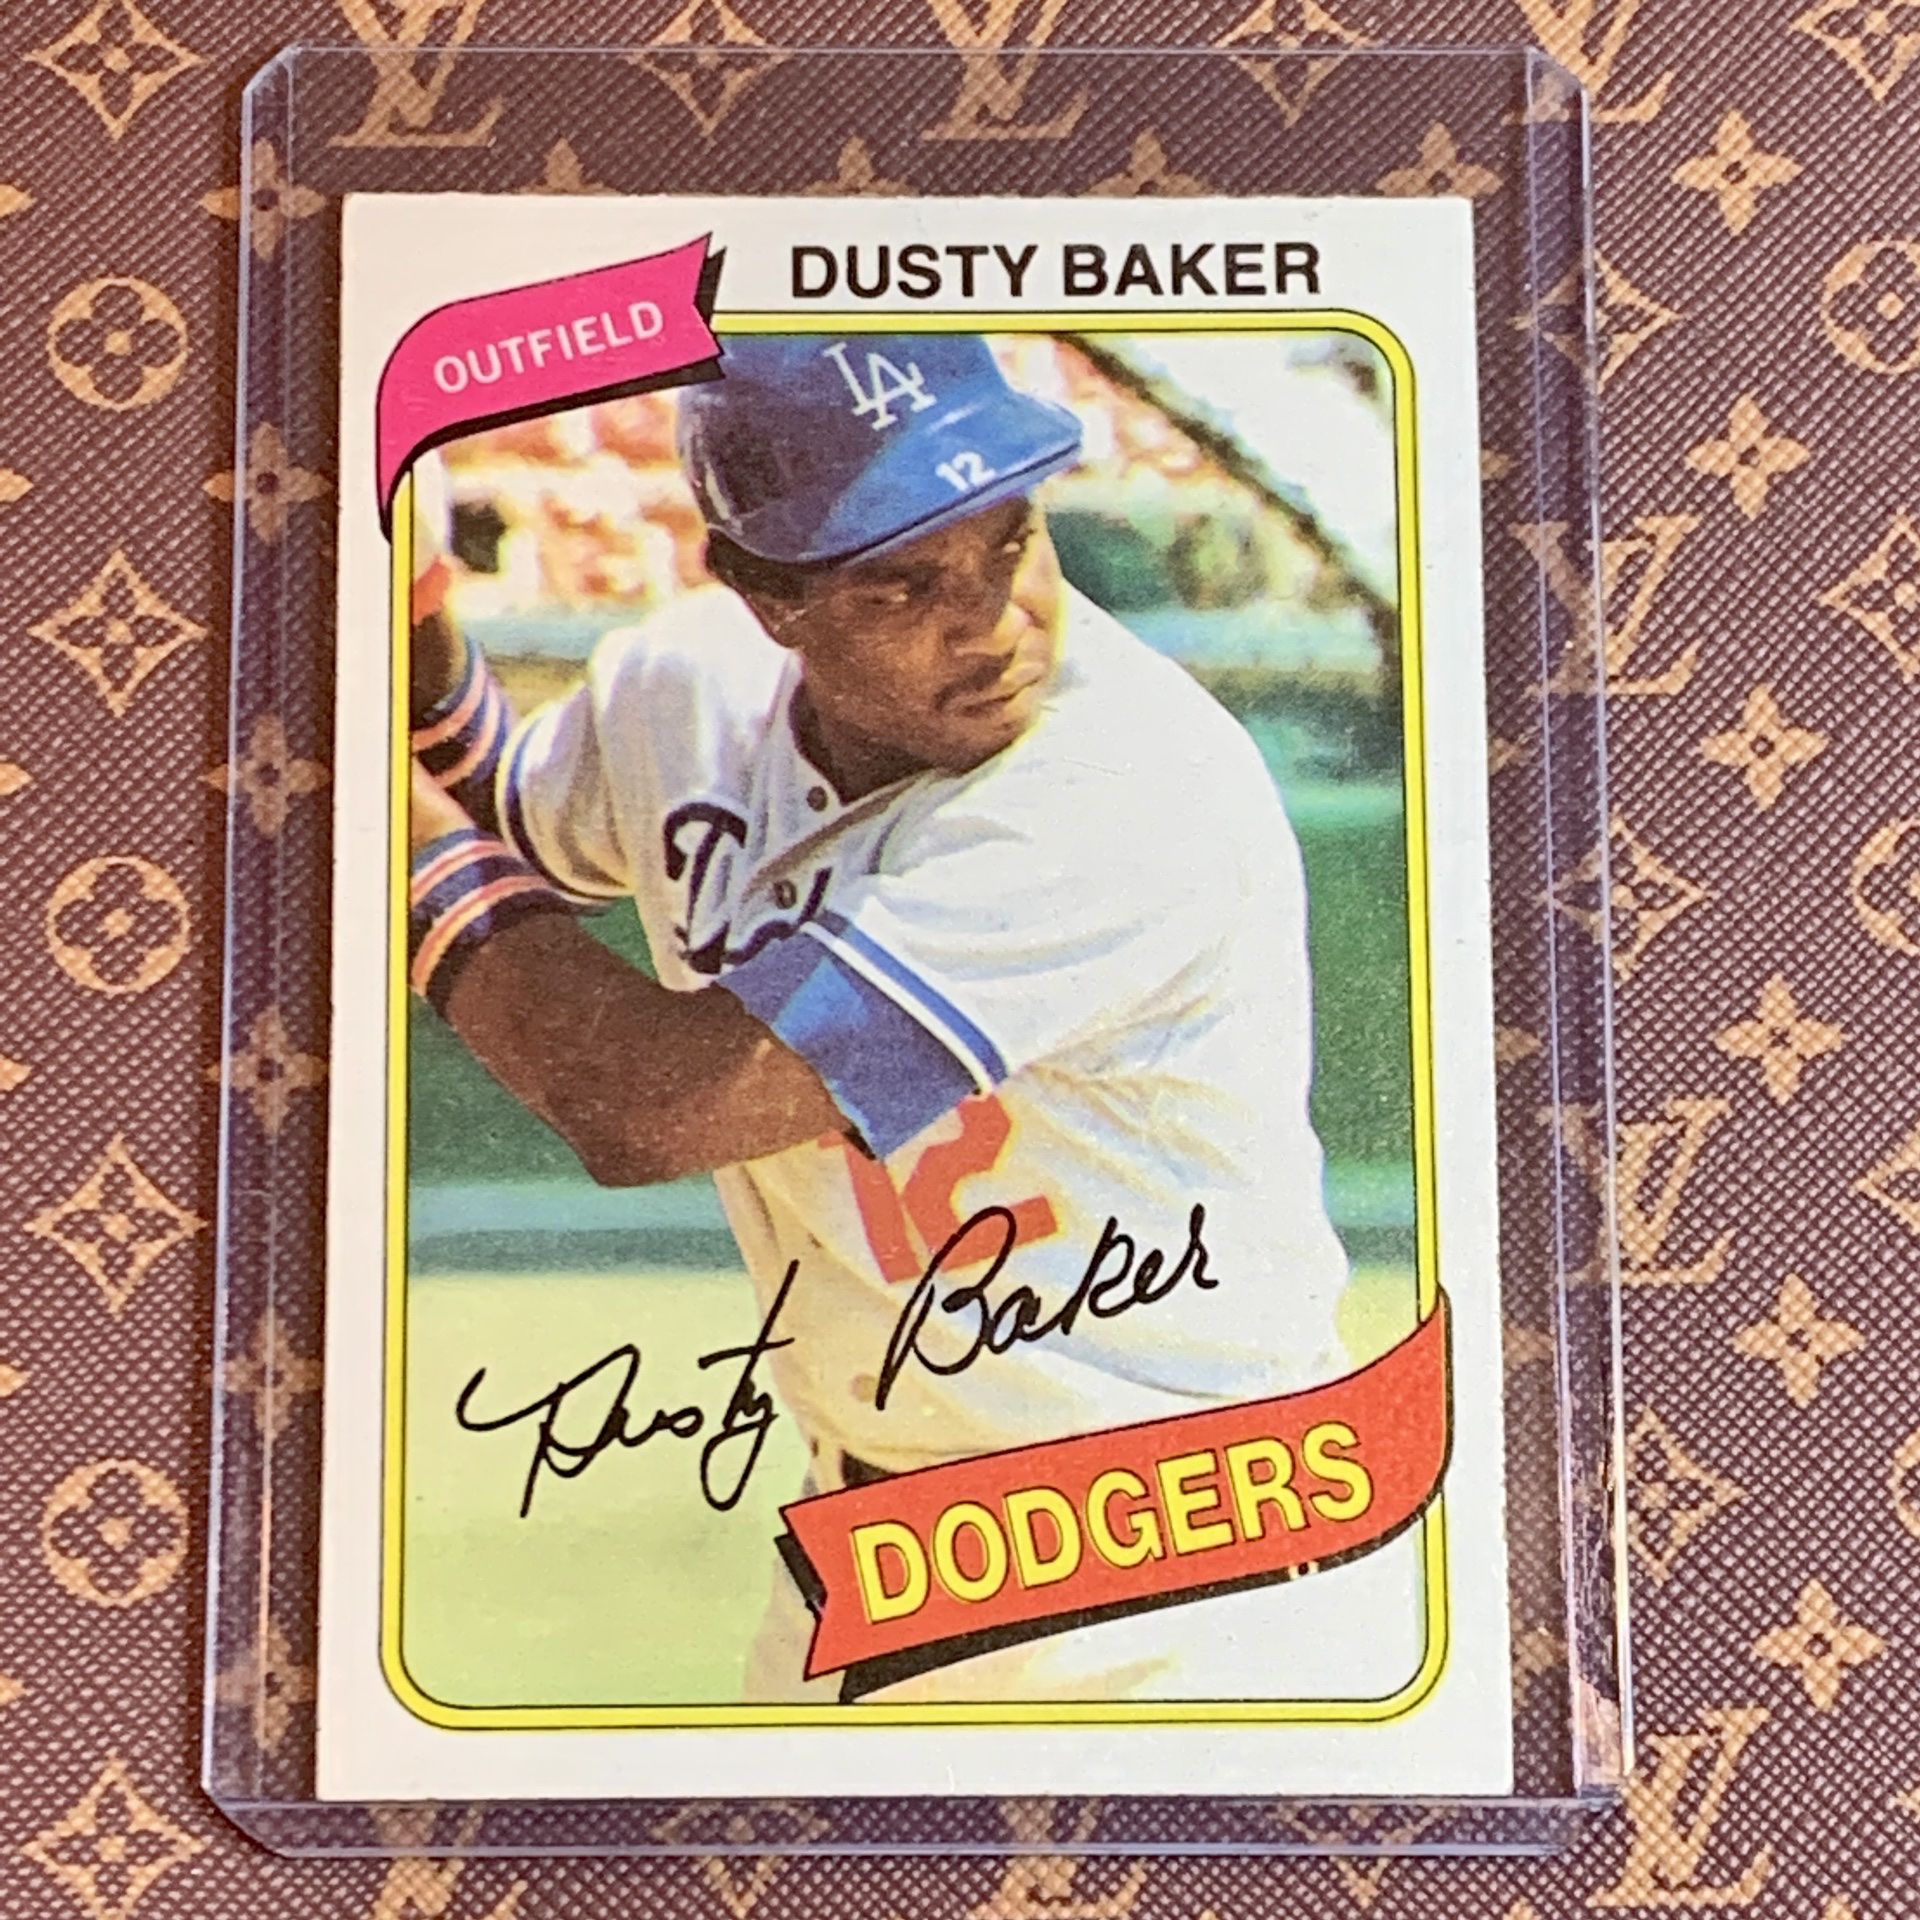  1981 Donruss Baseball Card #179 Dusty Baker